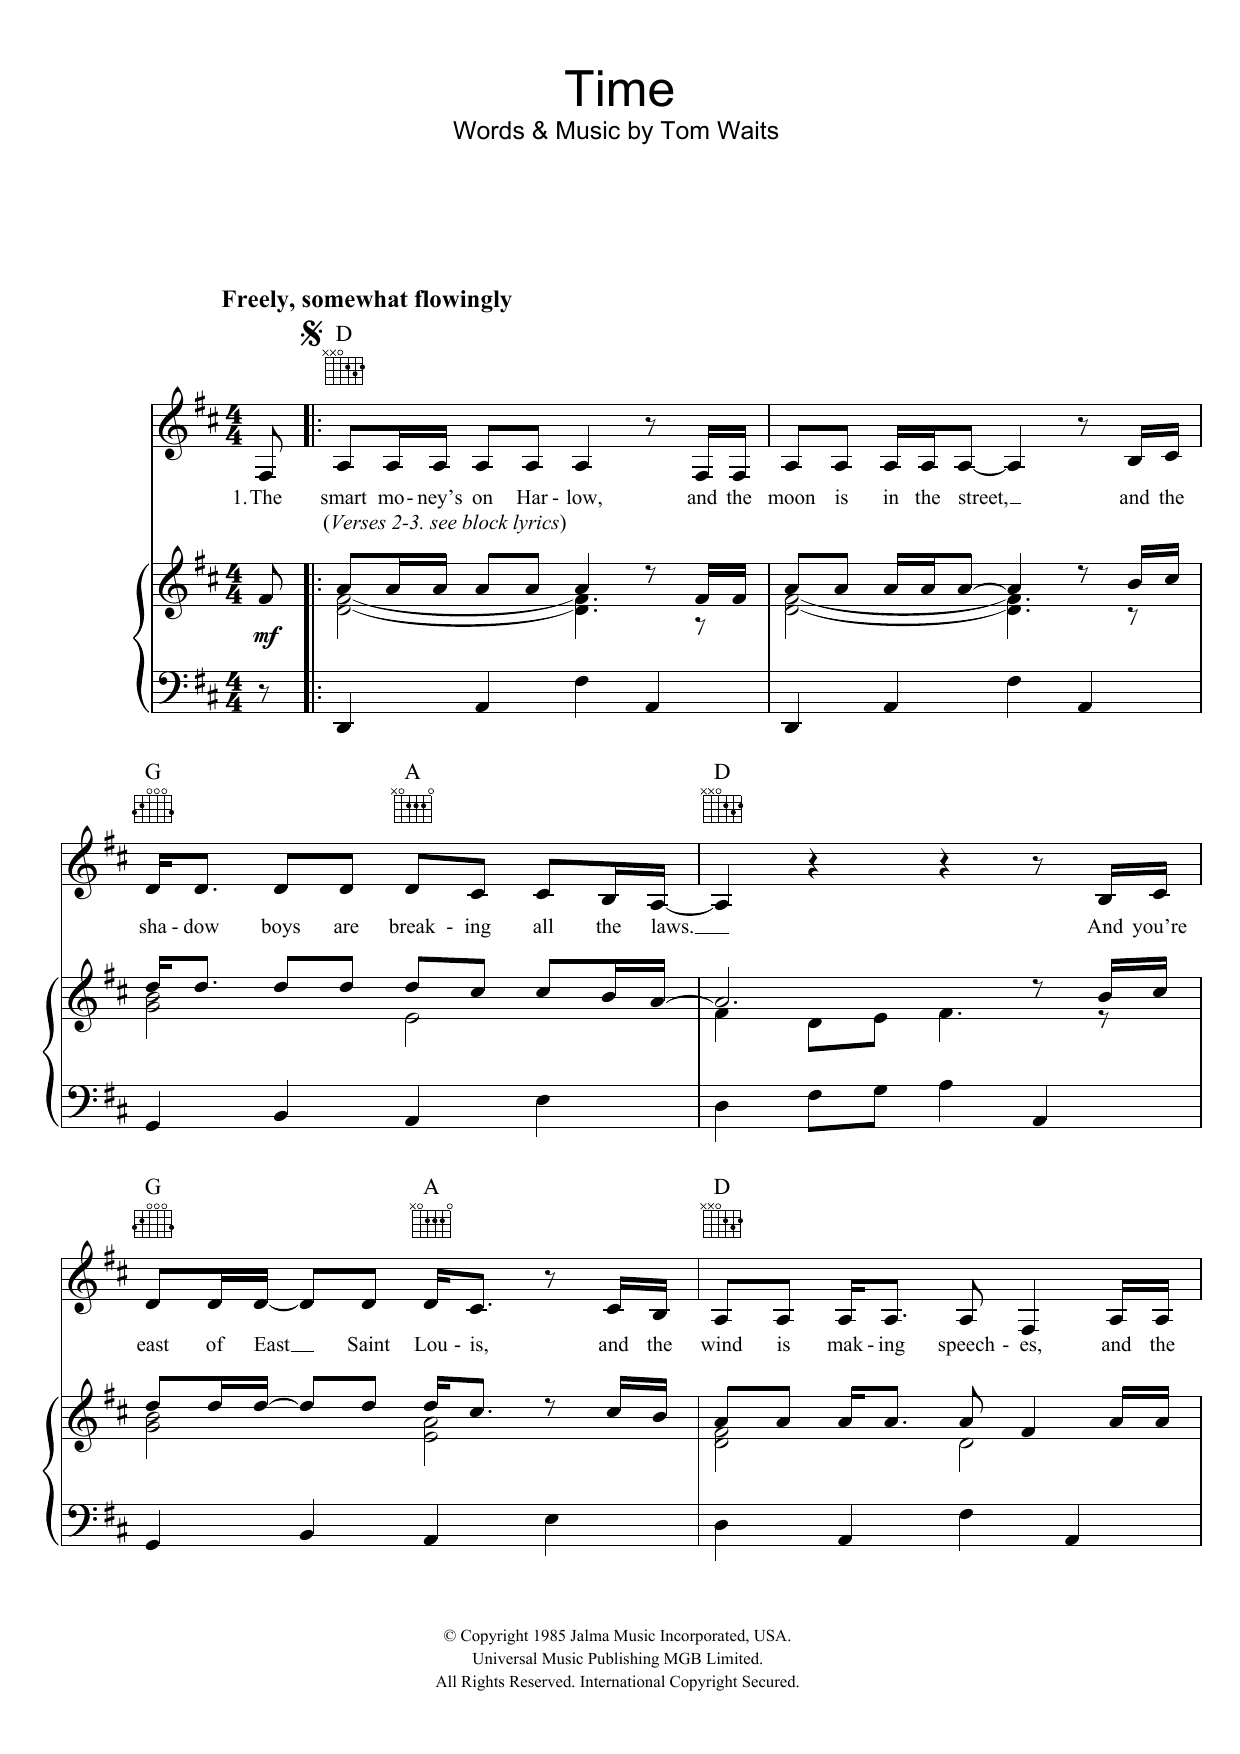 Tom Waits Time Sheet Music Notes & Chords for Lyrics & Chords - Download or Print PDF